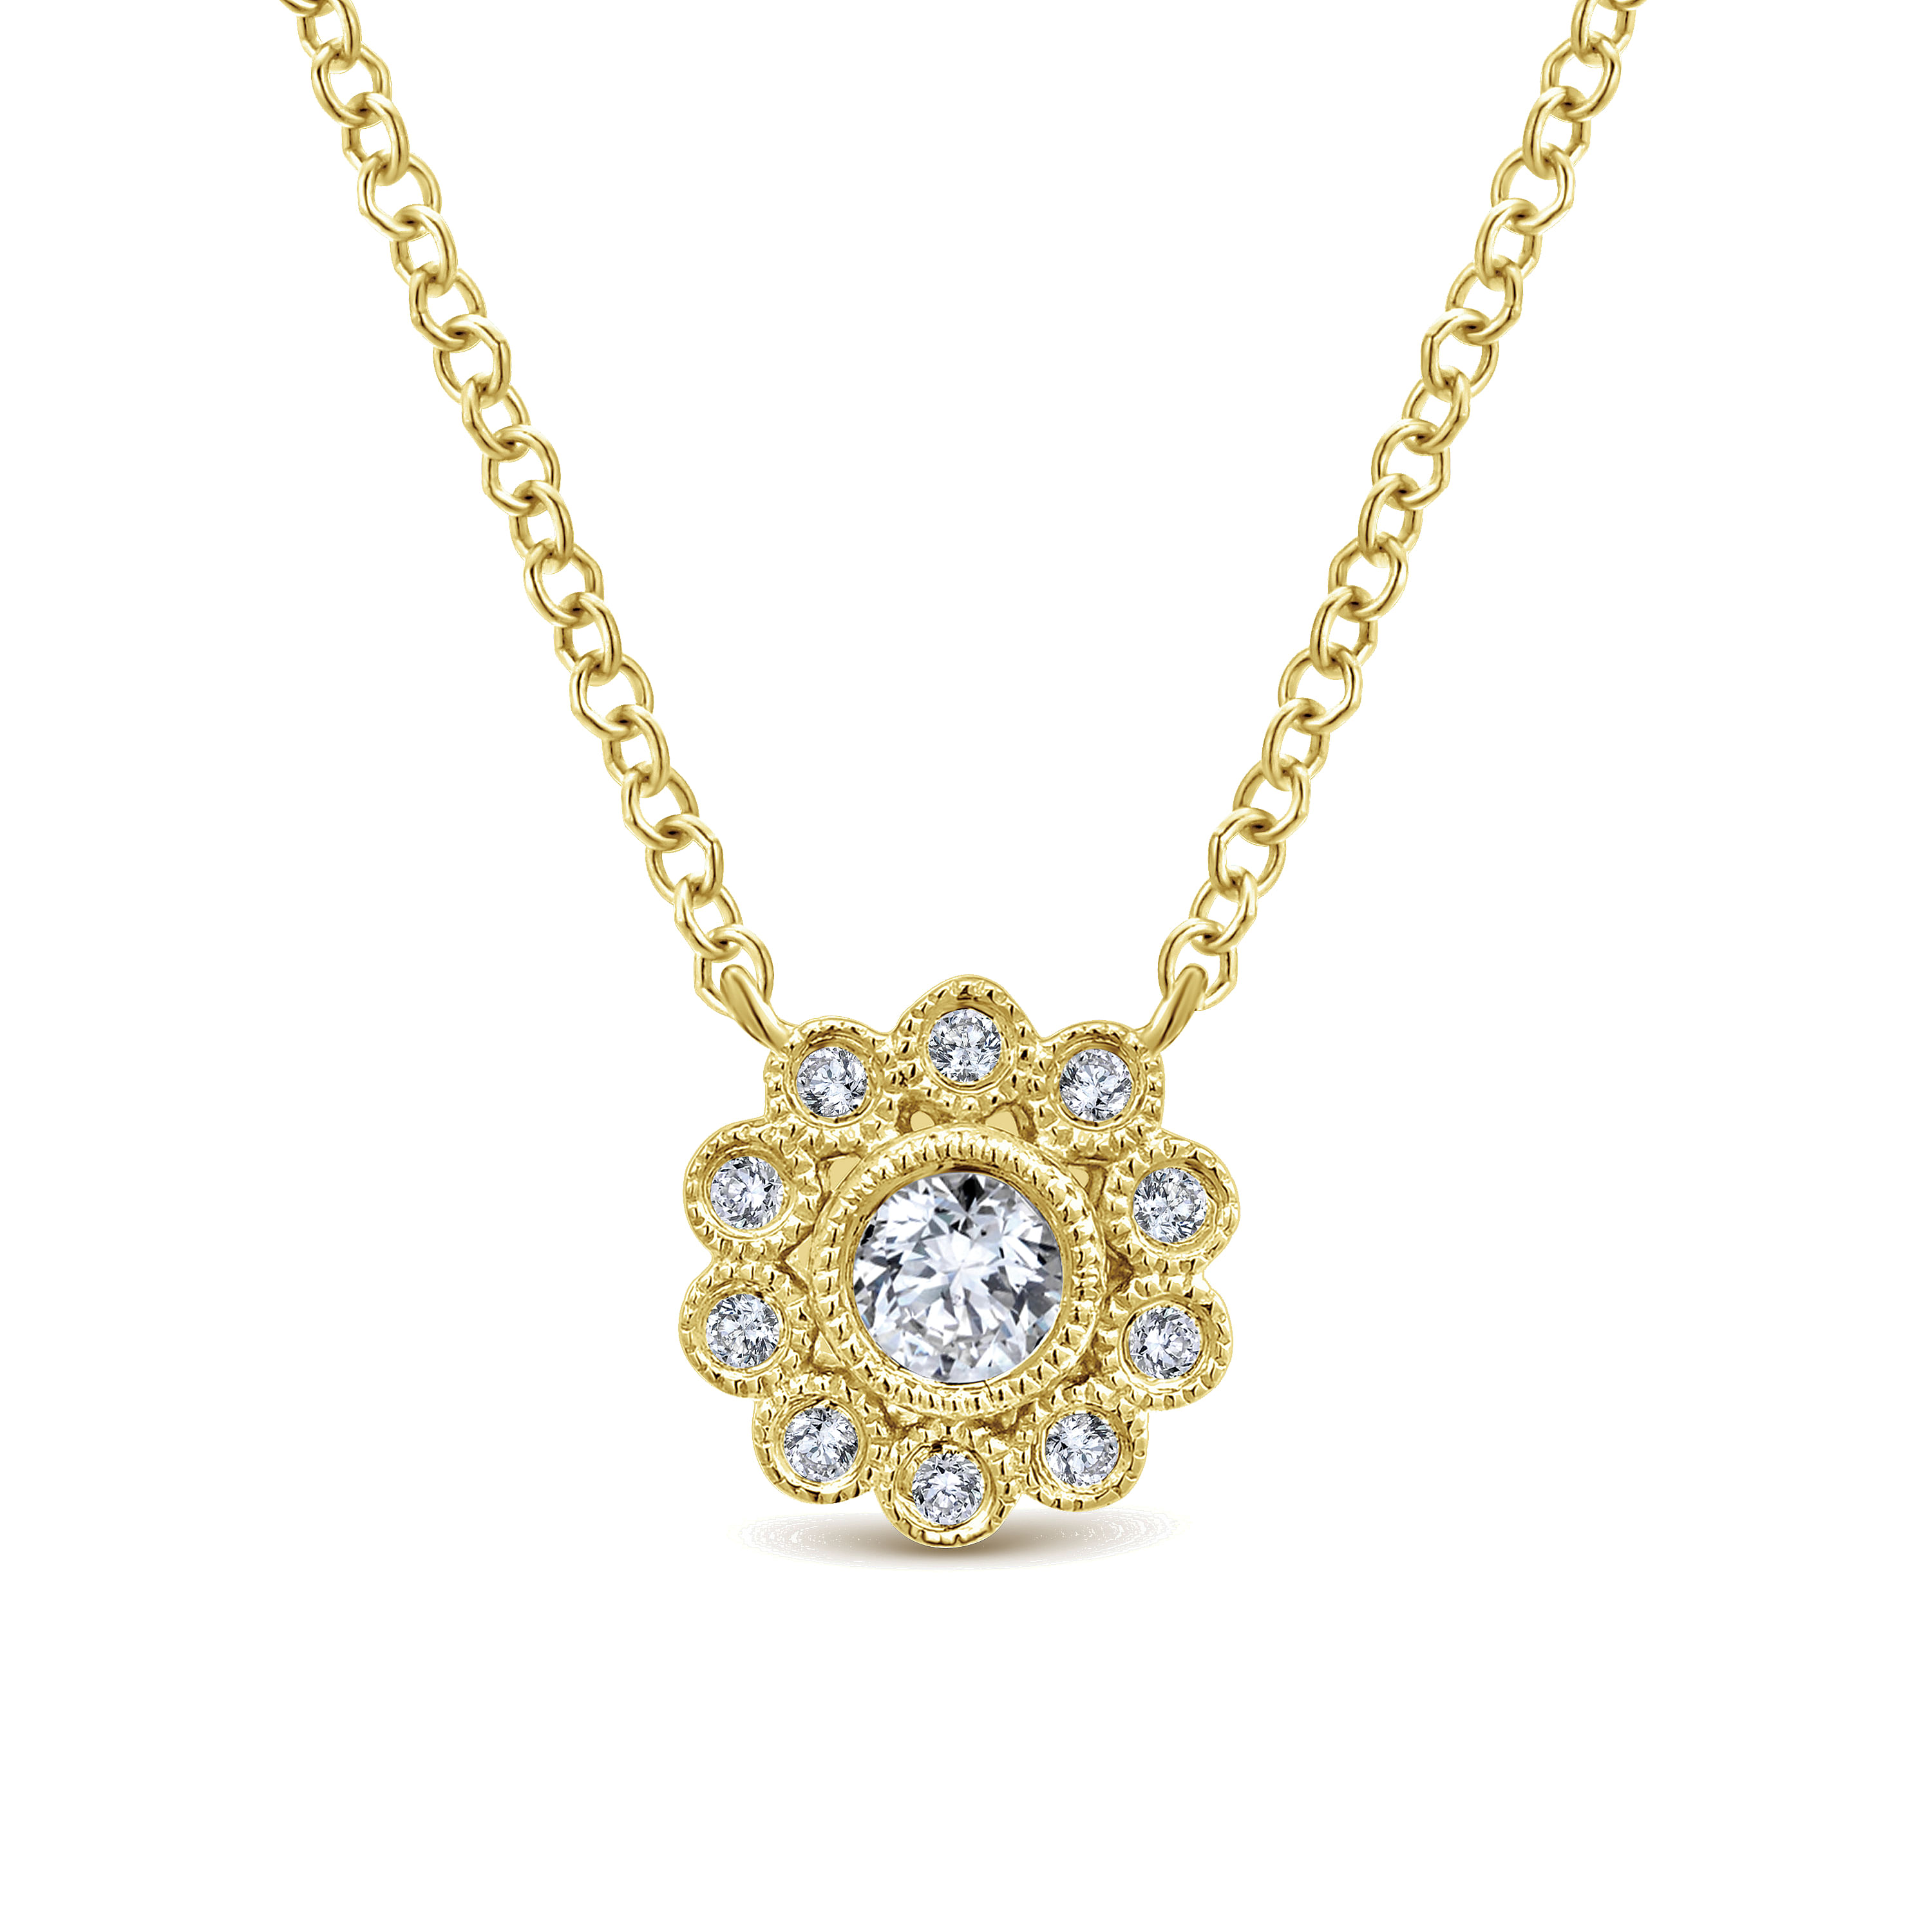 14K-Yellow-Gold-Bezel-Set-Floral-Diamond-Pendant-Necklace1